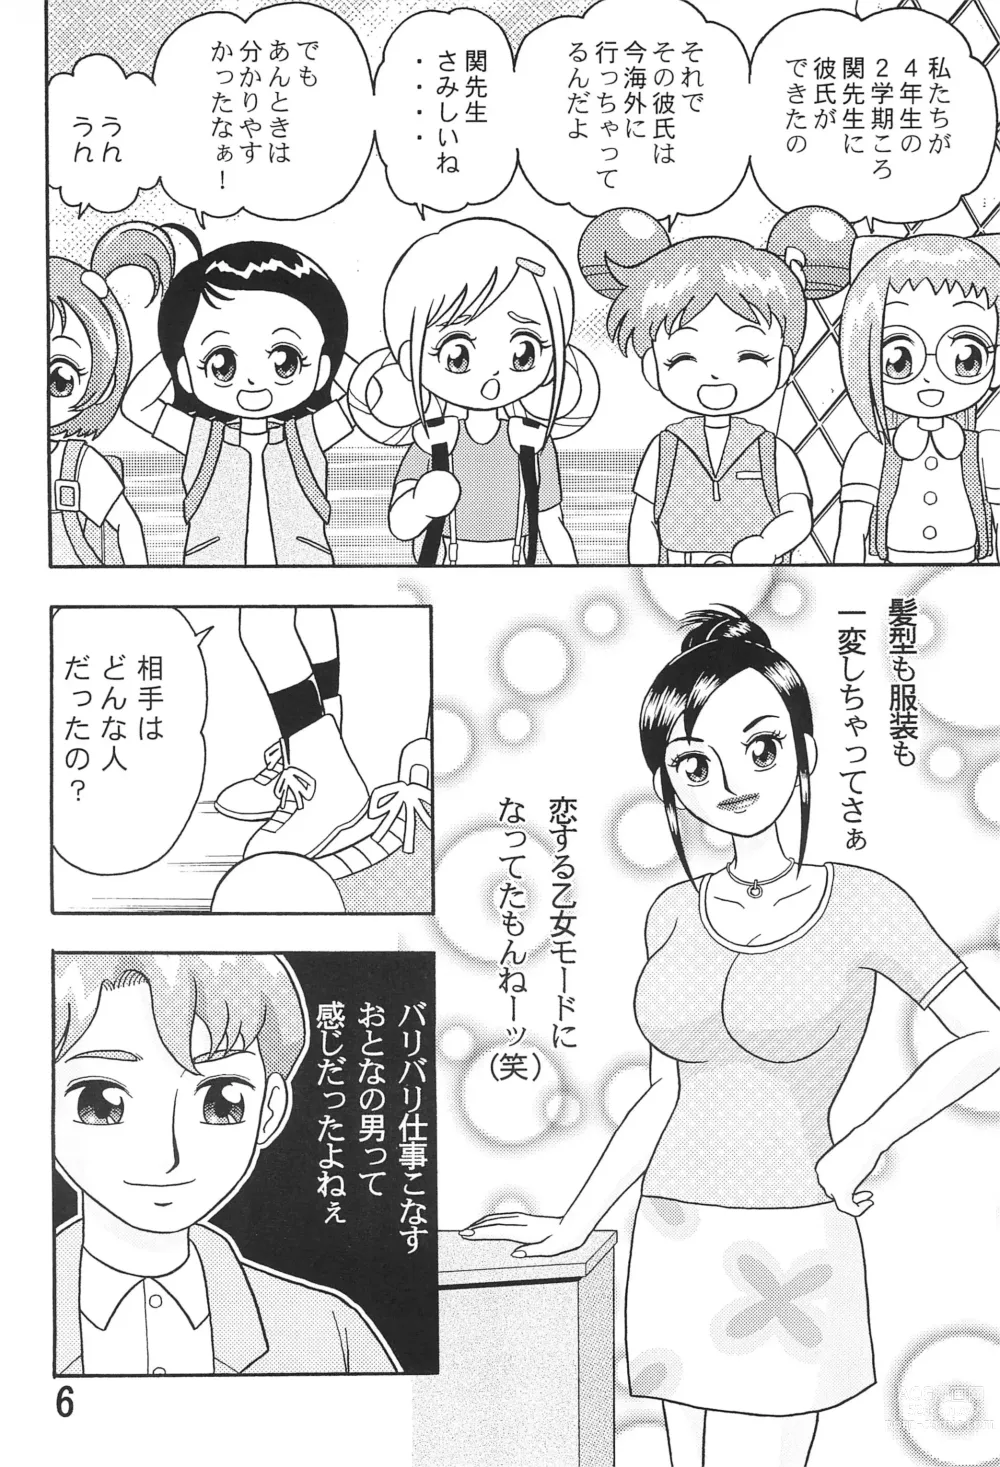 Page 8 of doujinshi 5 Nen 1 Kumi Mahougumi 2